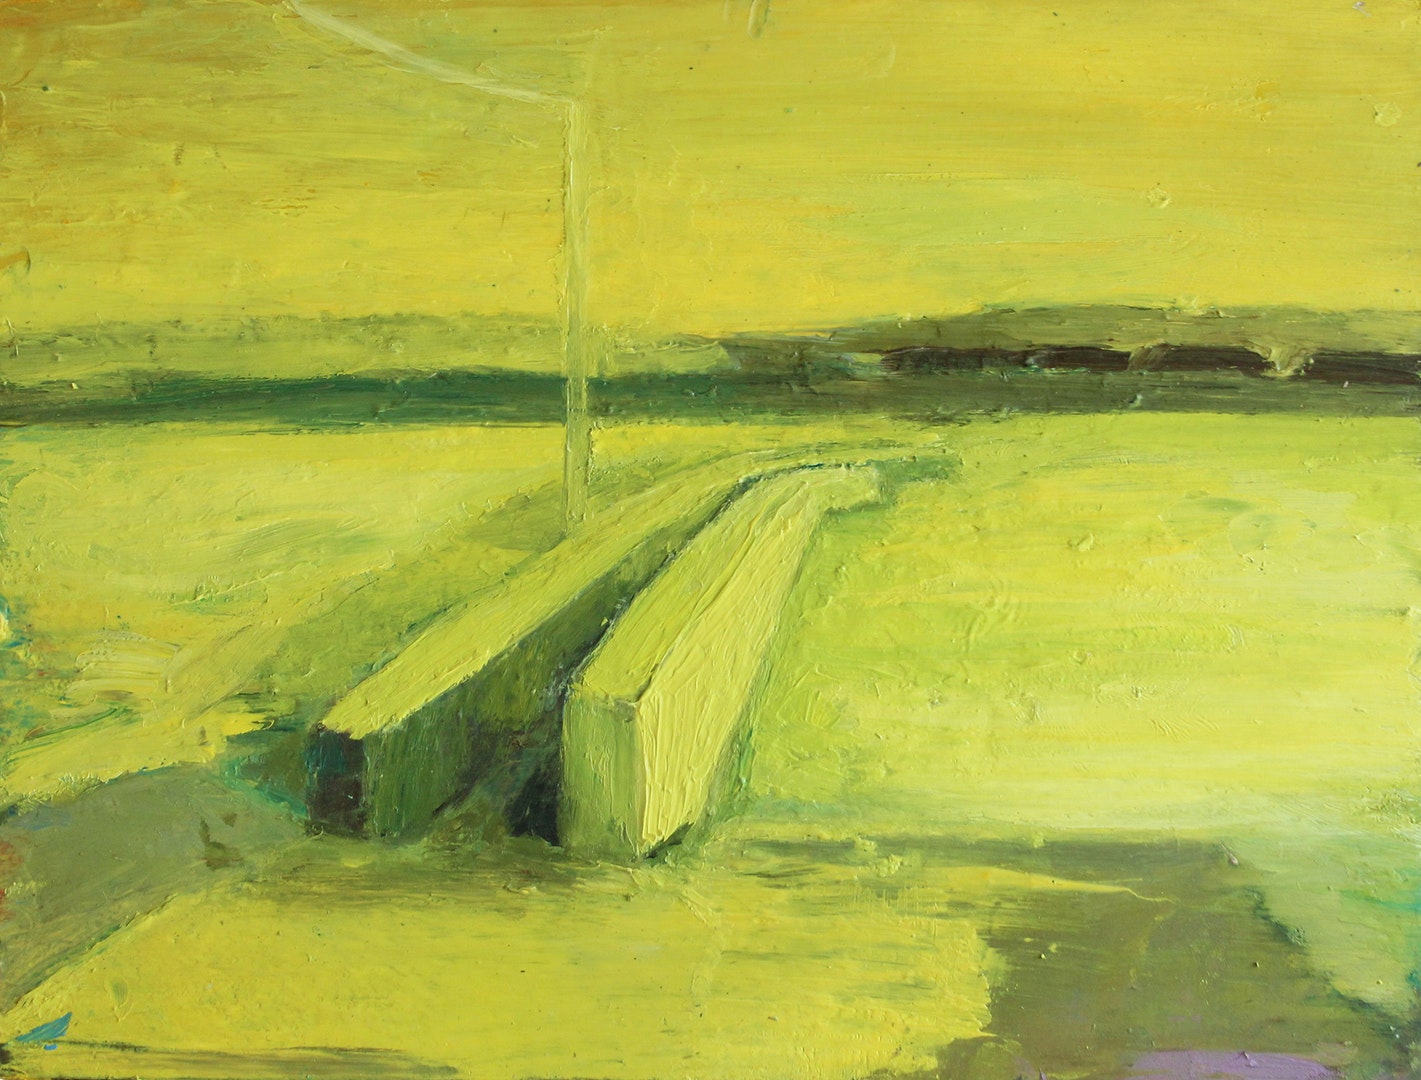 'Quiet Summer', Robbie O'Keeffe, Oil on wood, 22.5 x 30 cm